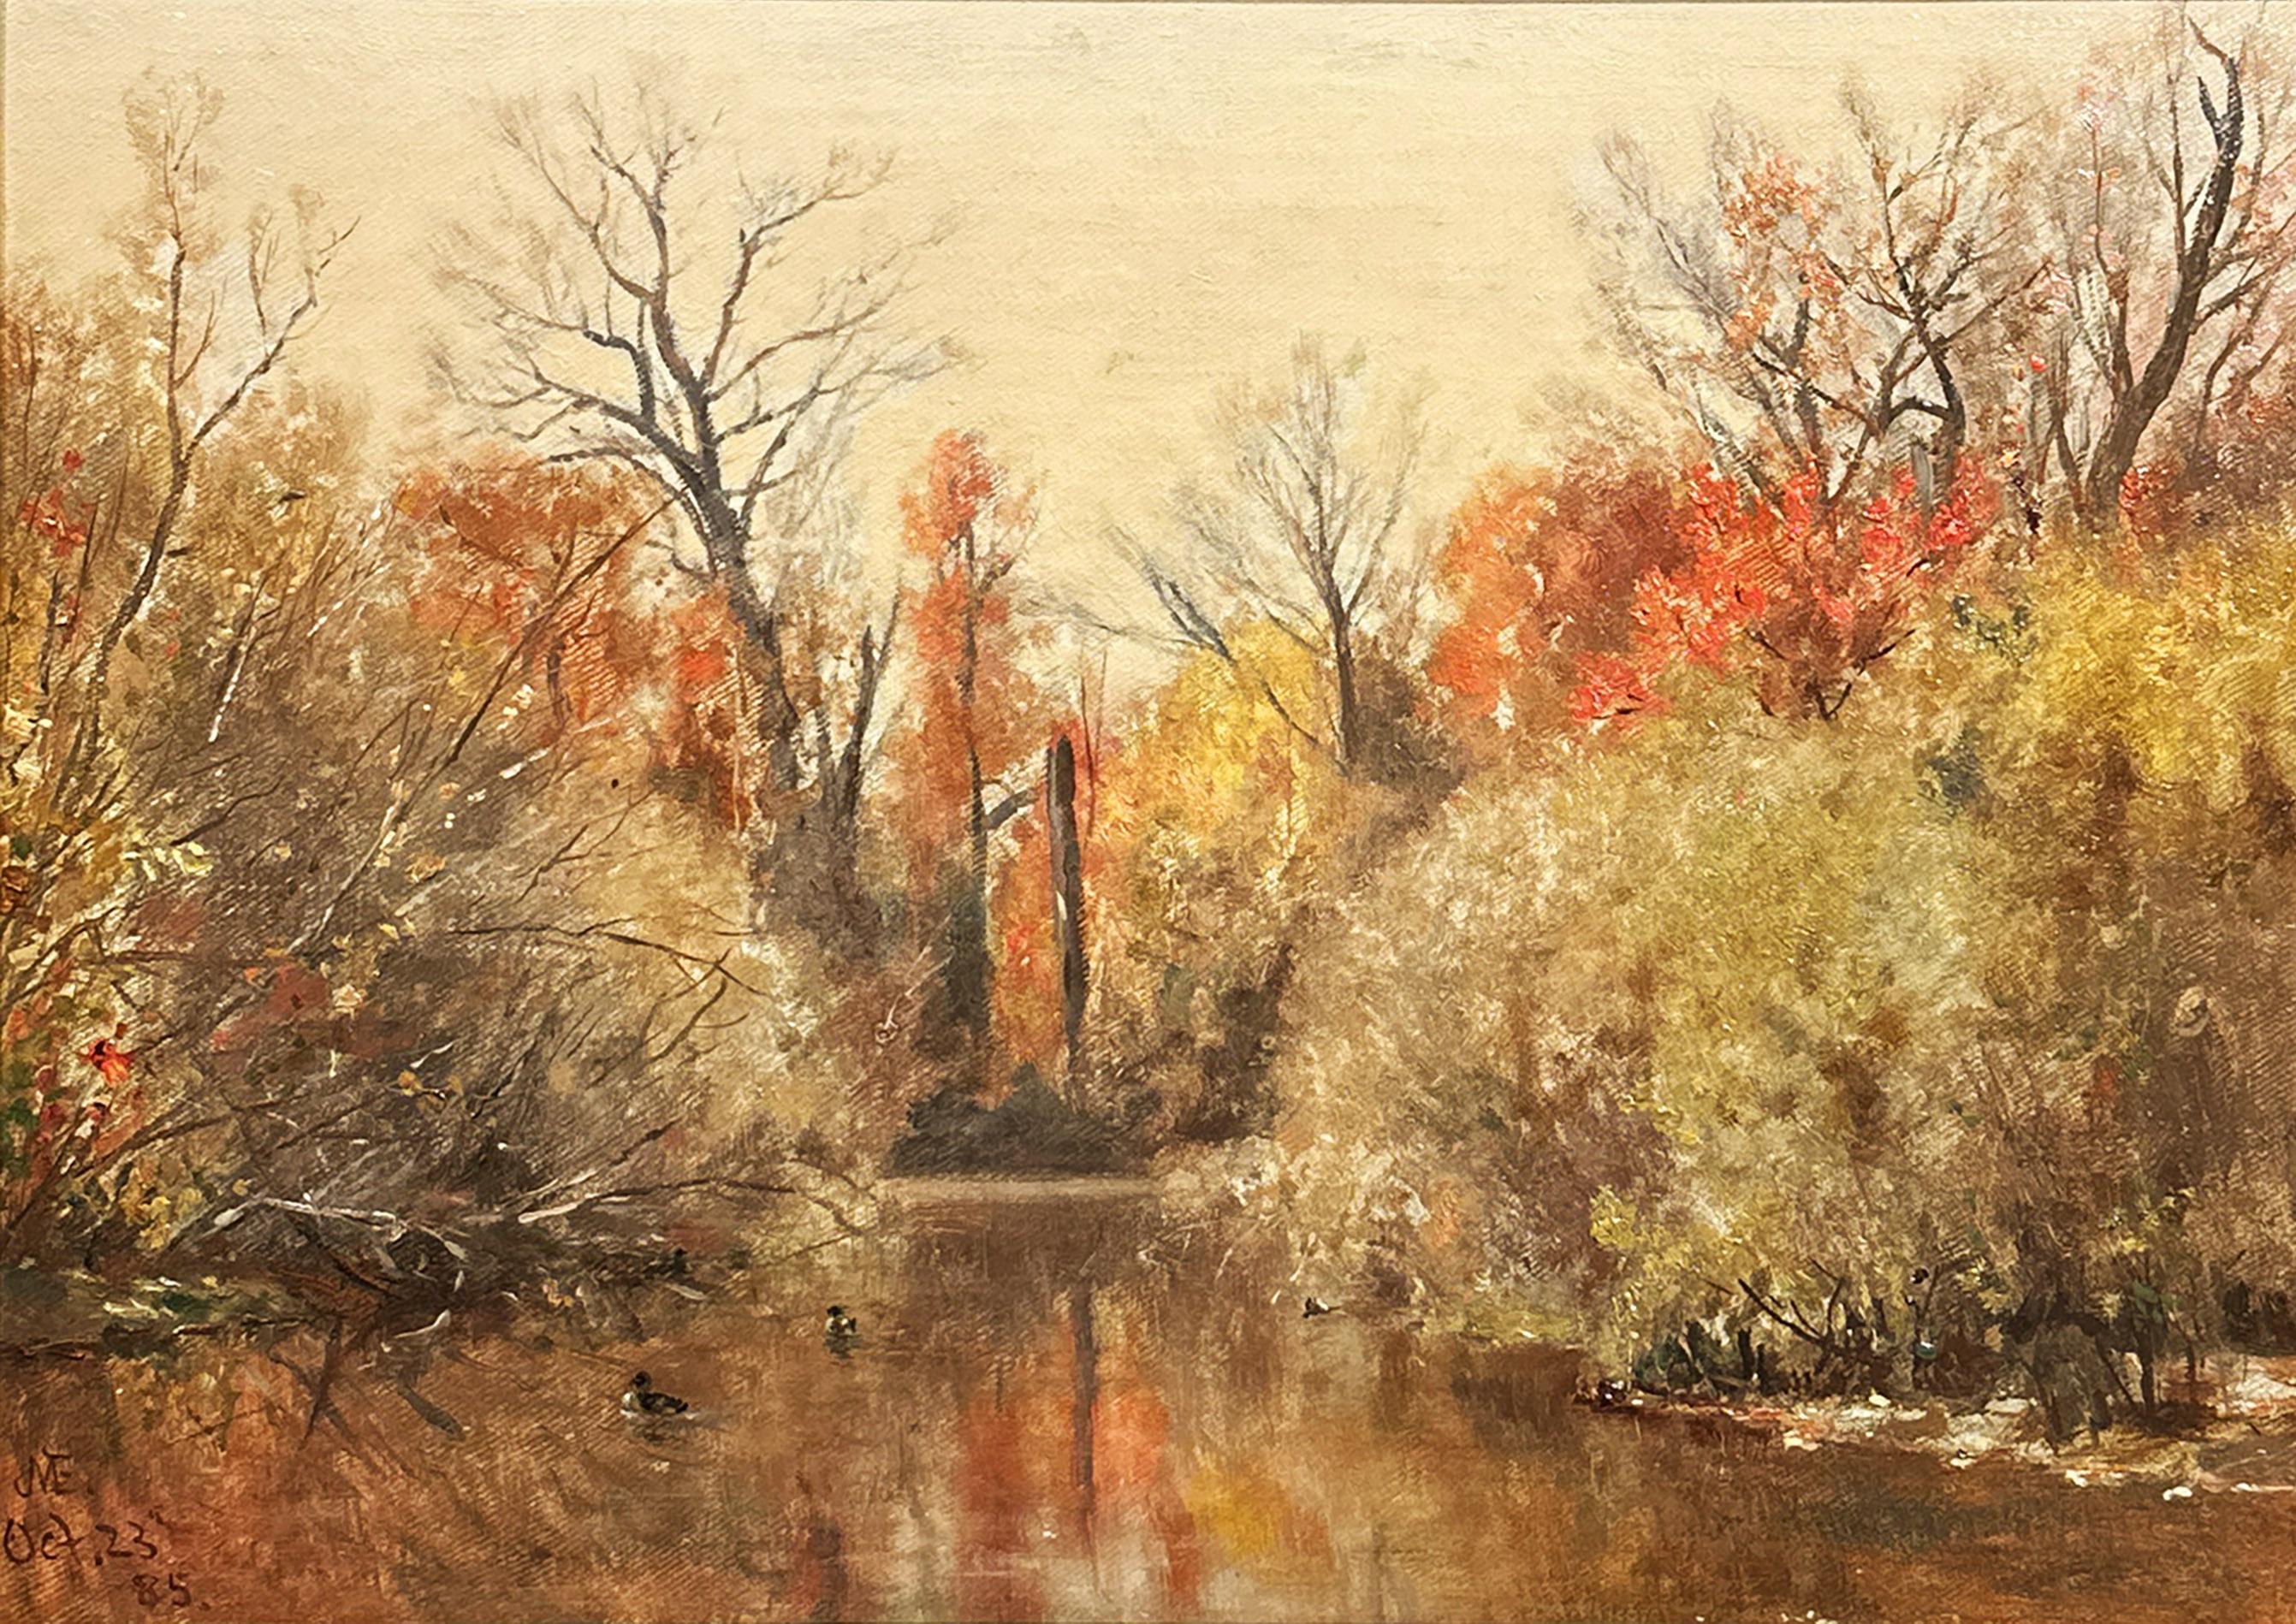 Autumn Idle, Catskills, New York, October 23, 1885